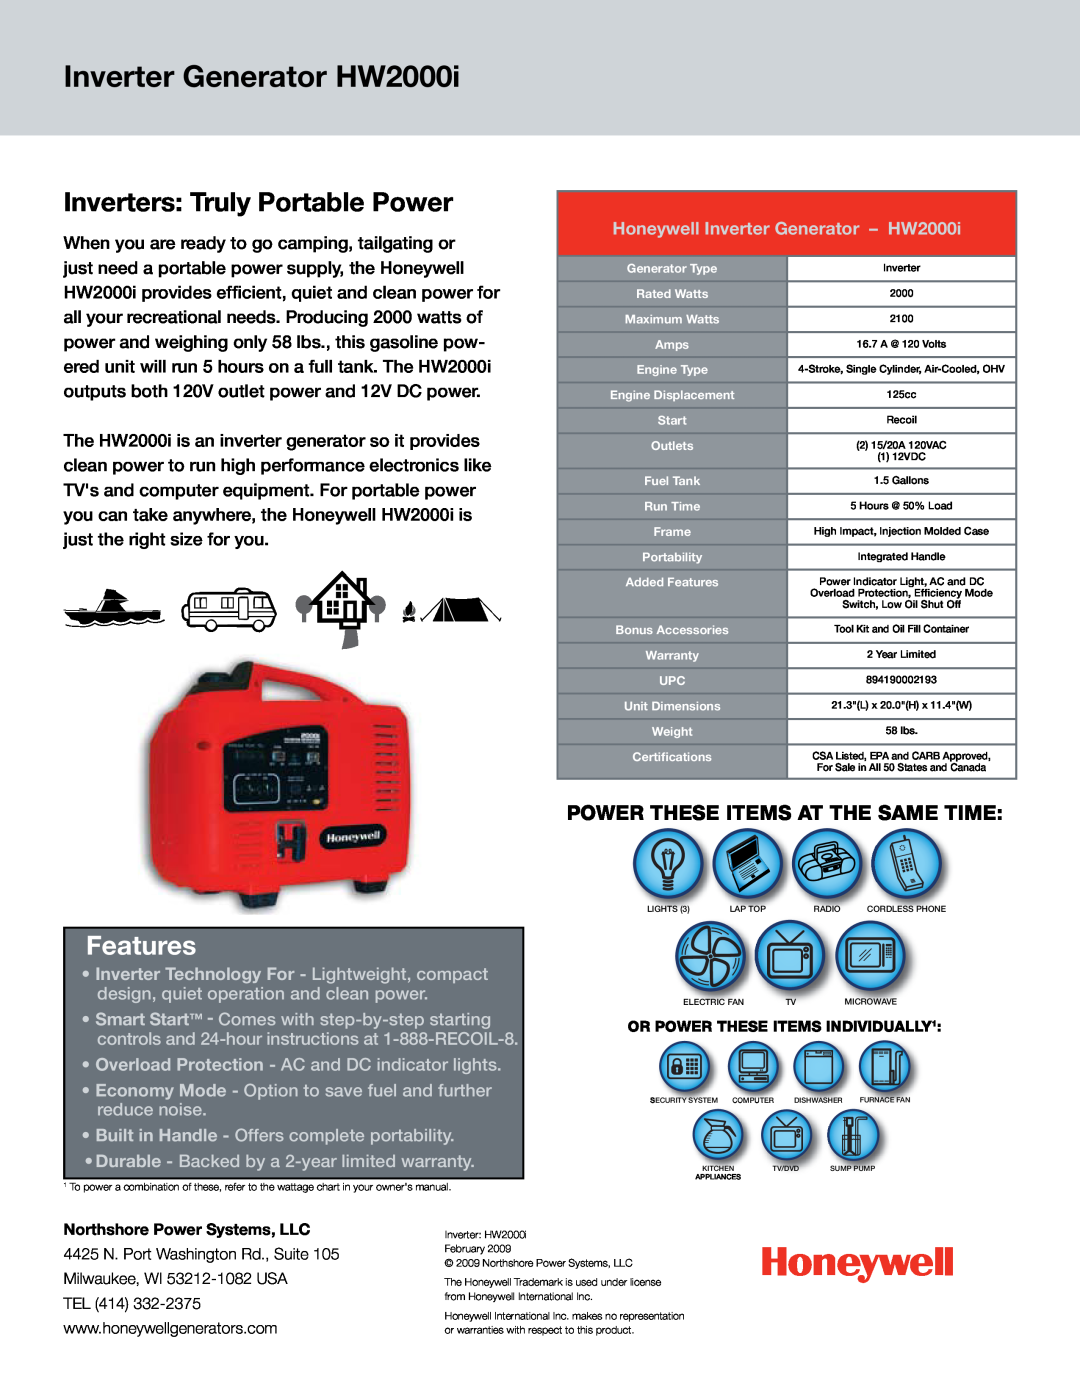 Honeywell warranty Inverter Generator HW2000i, Inverters Truly Portable Power, Features 